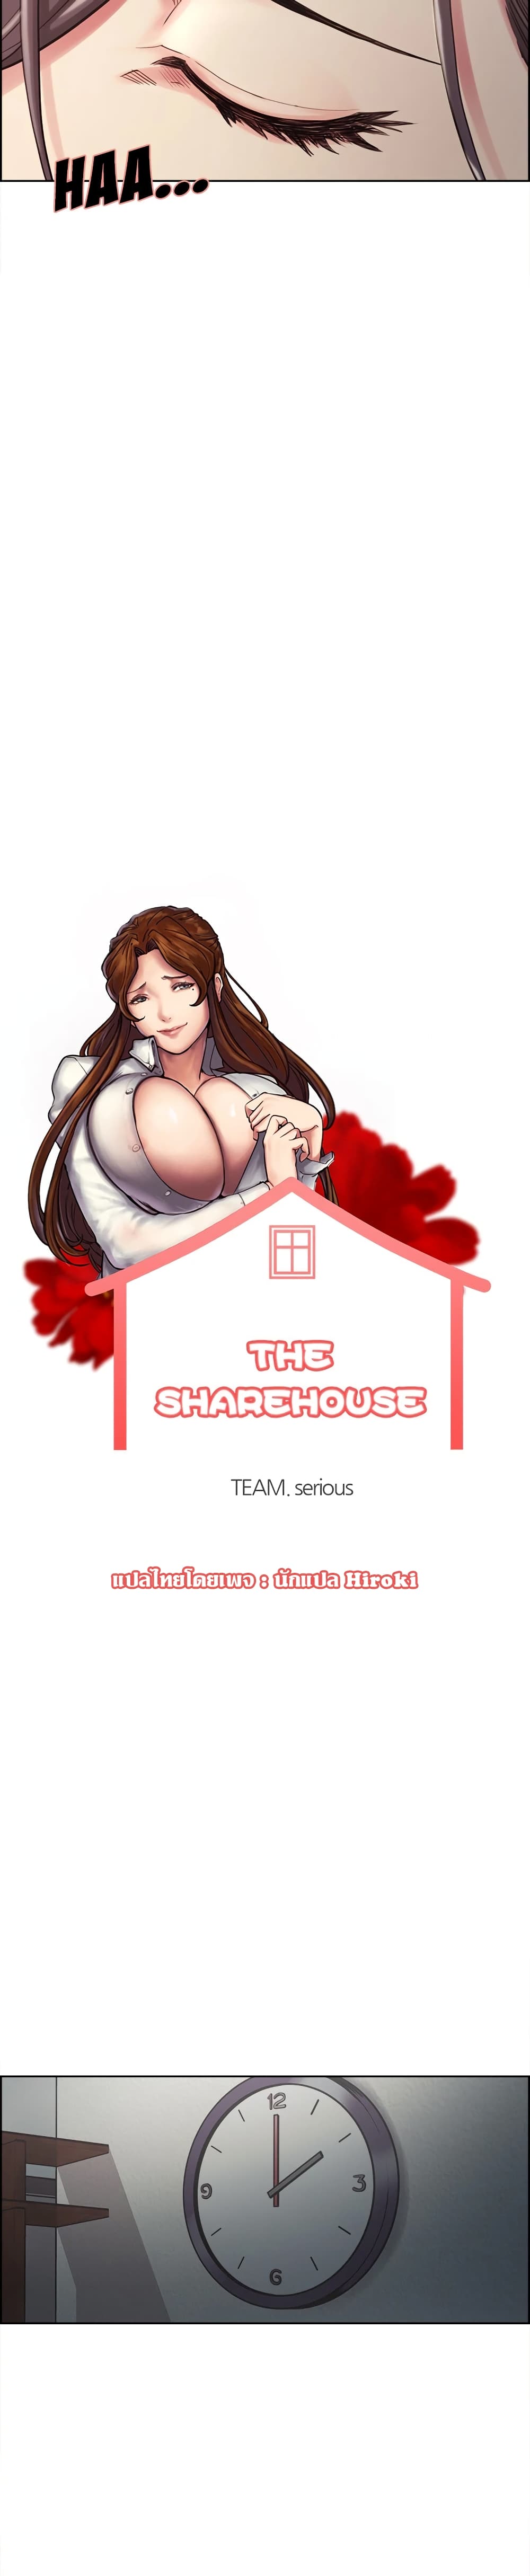 The Sharehouse 41-41